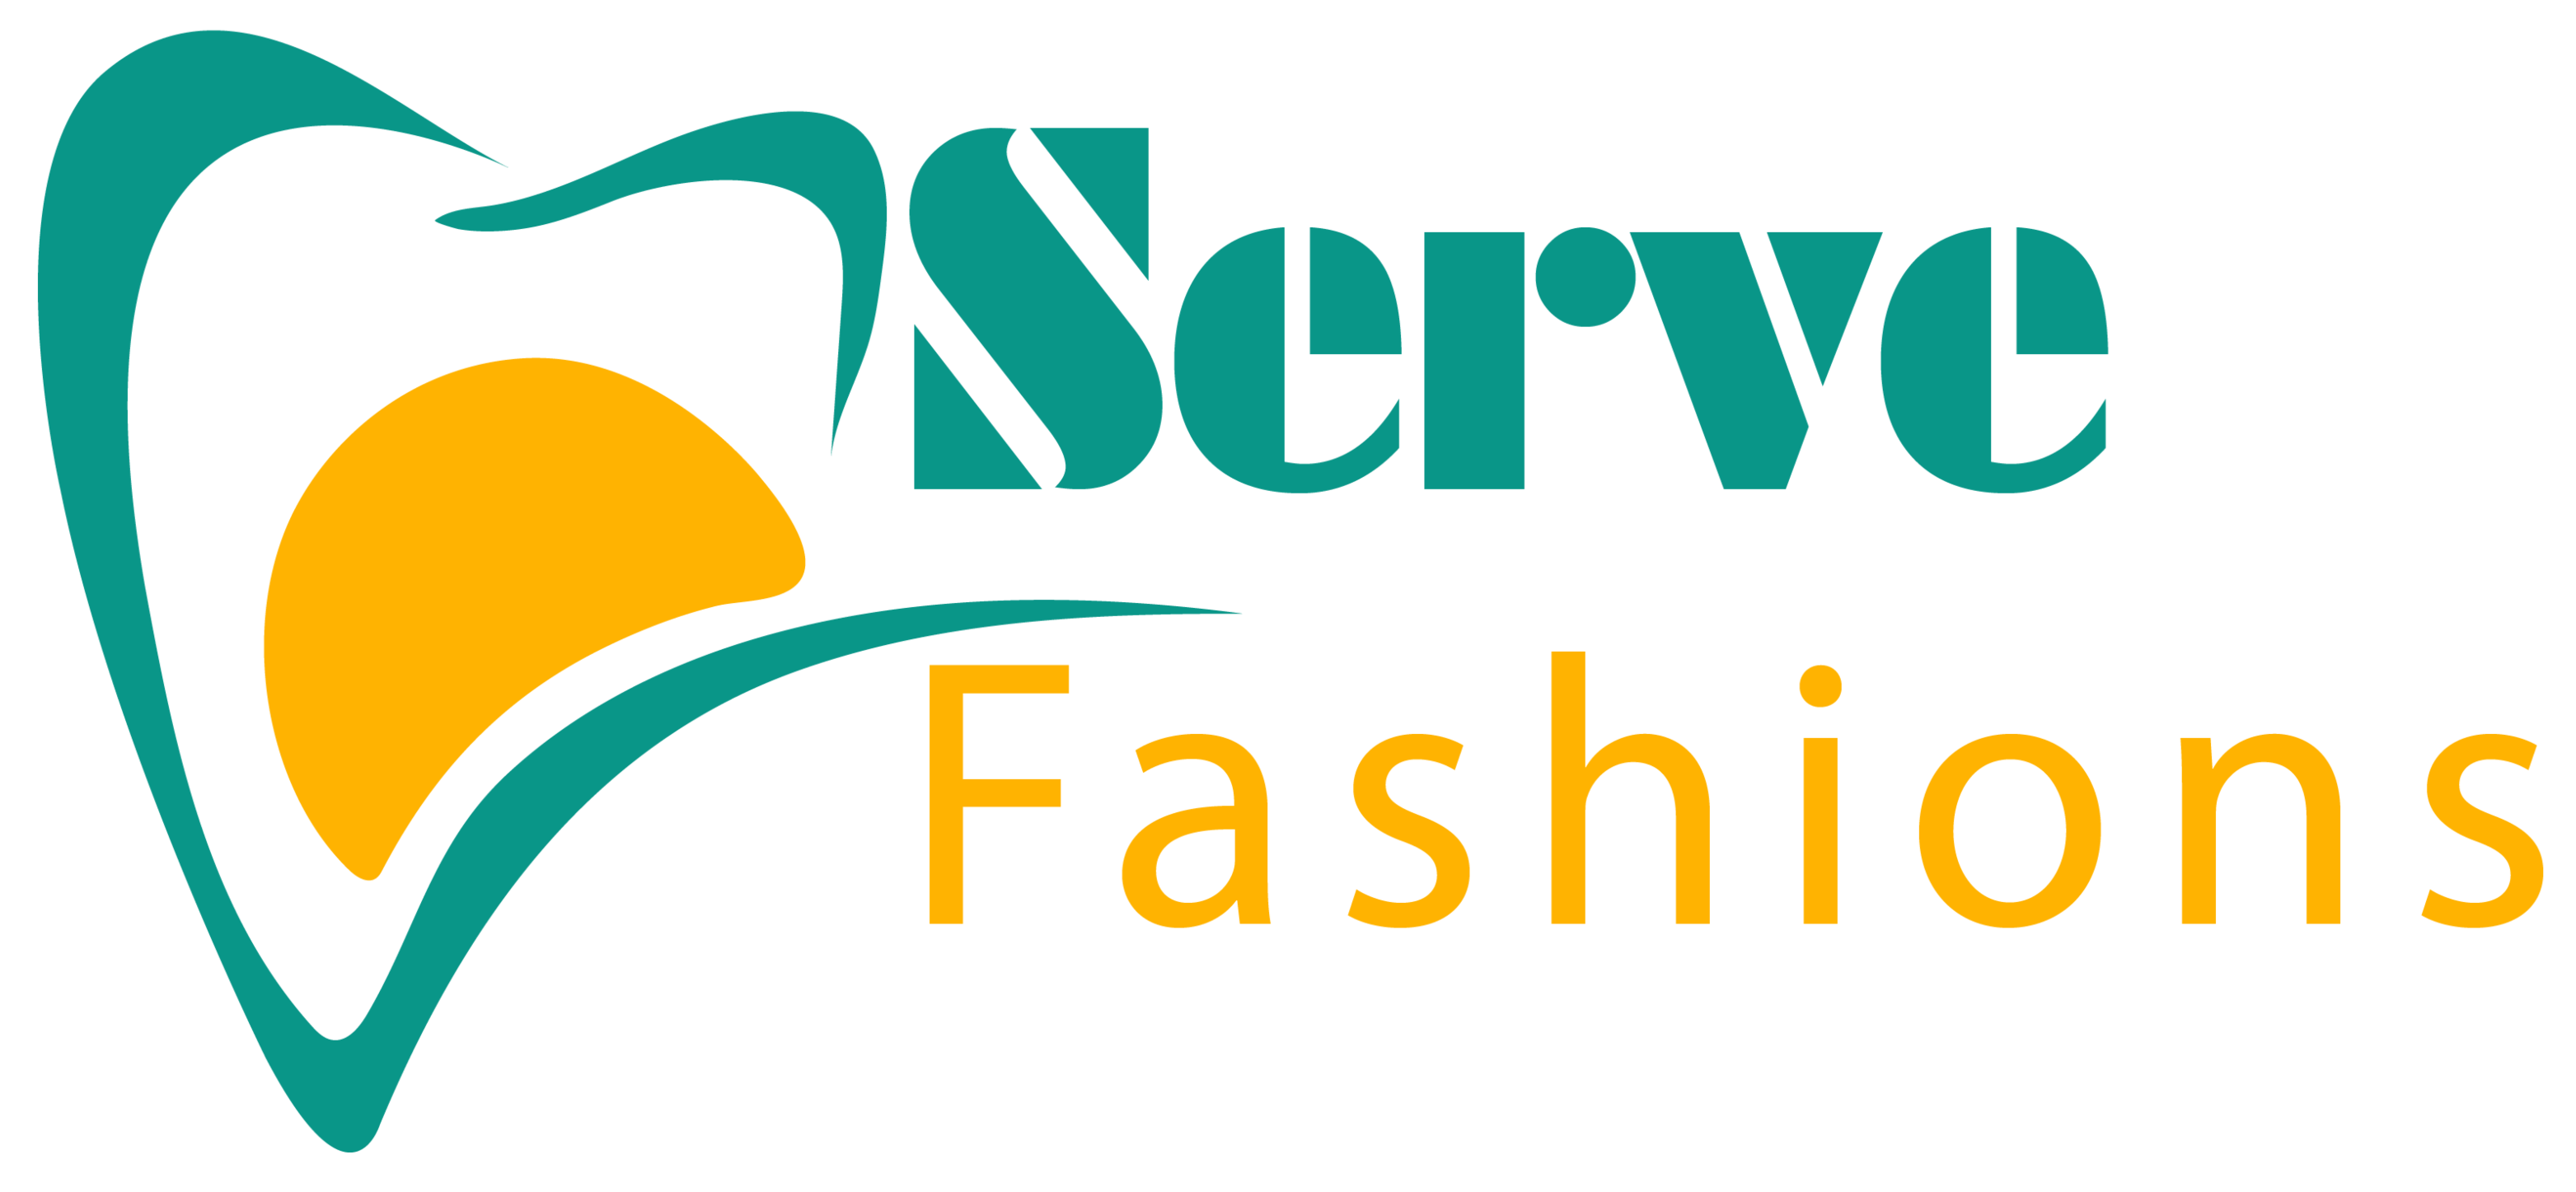 Serve Fashions